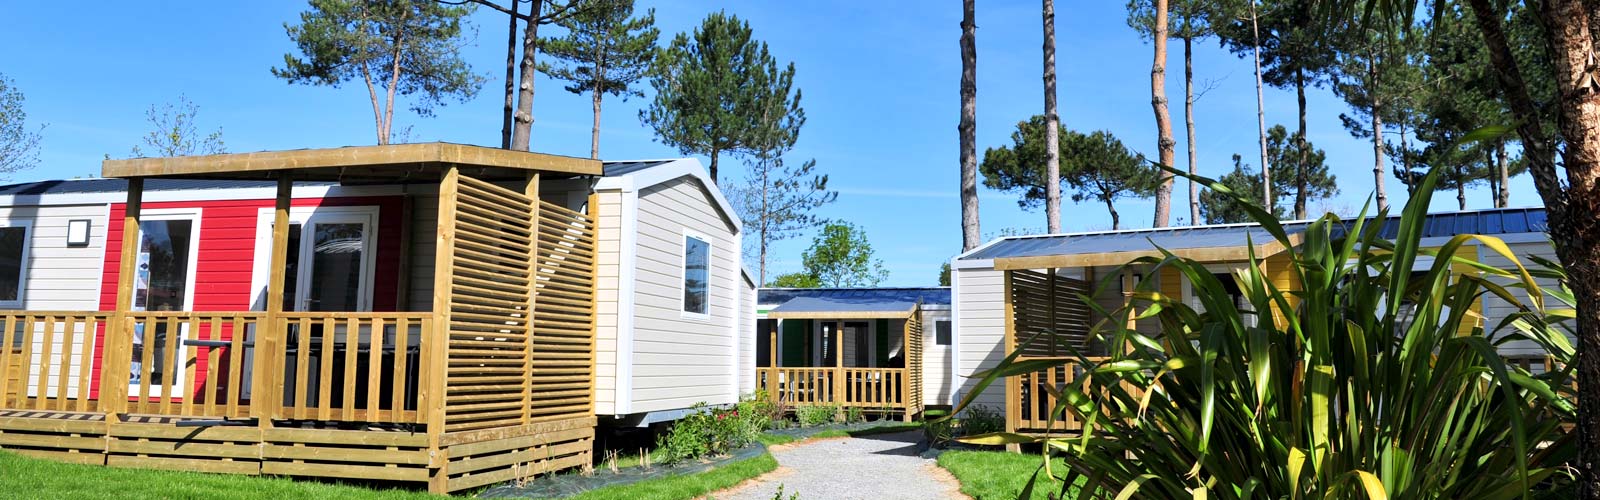 Comfort range mobile home rental at Le Fief campsite in Saint-Brevin